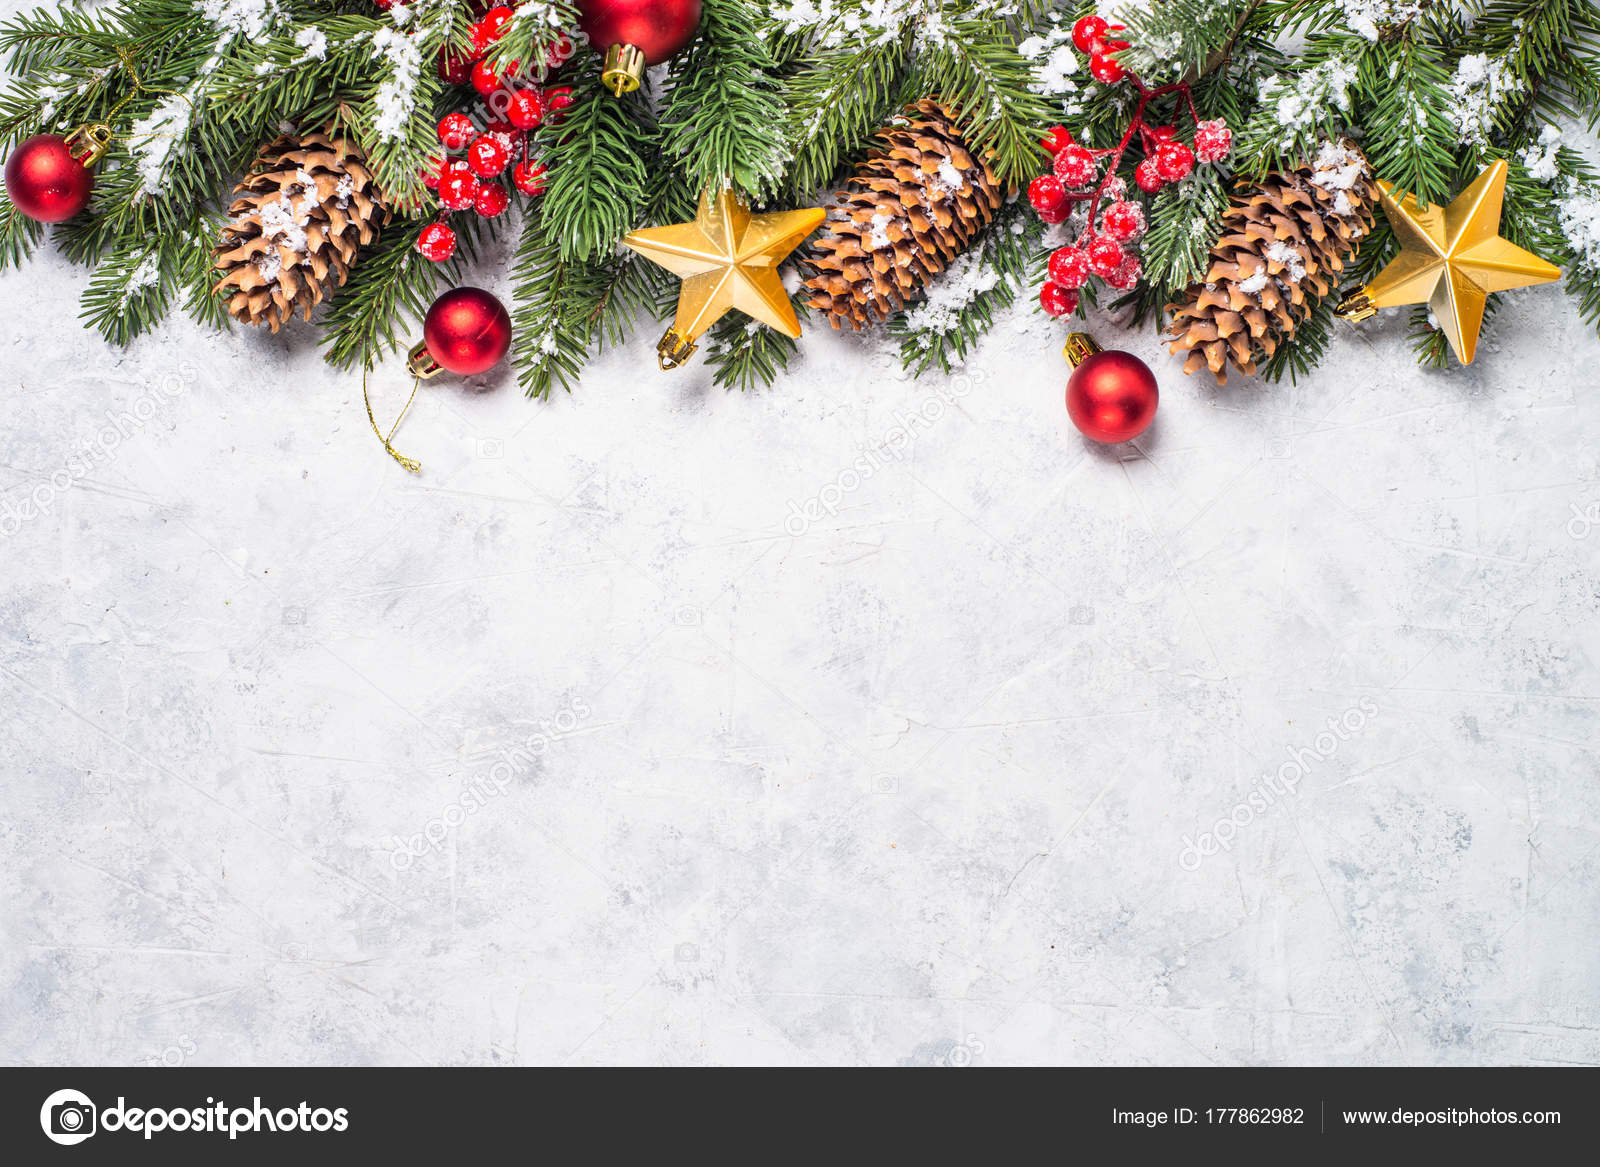 Christmas background Stock Photos, Royalty Free Christmas background Images  | Depositphotos